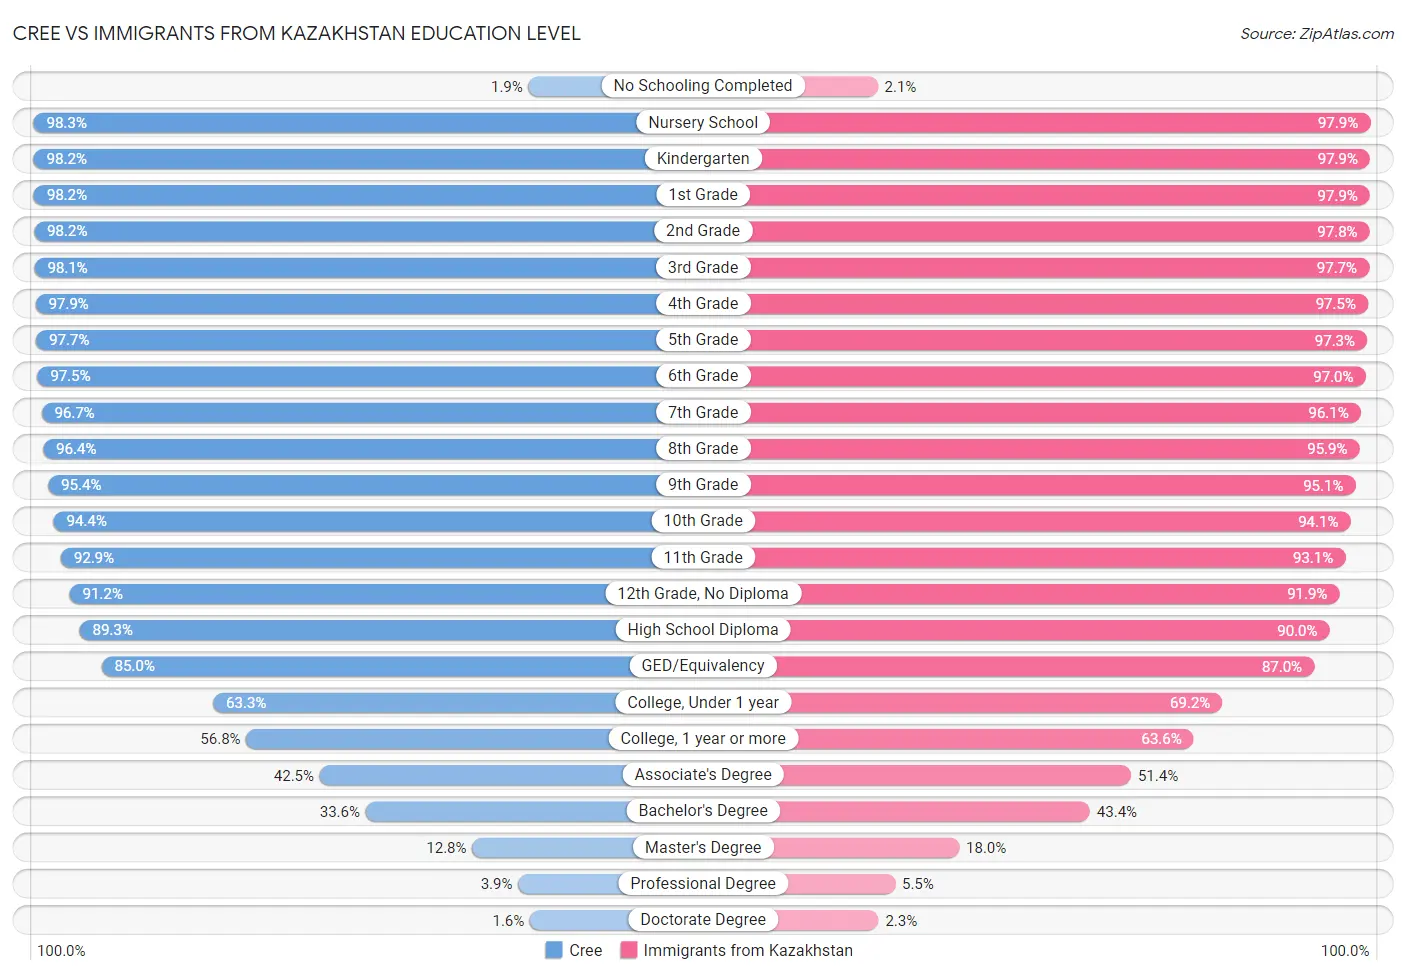 Cree vs Immigrants from Kazakhstan Education Level